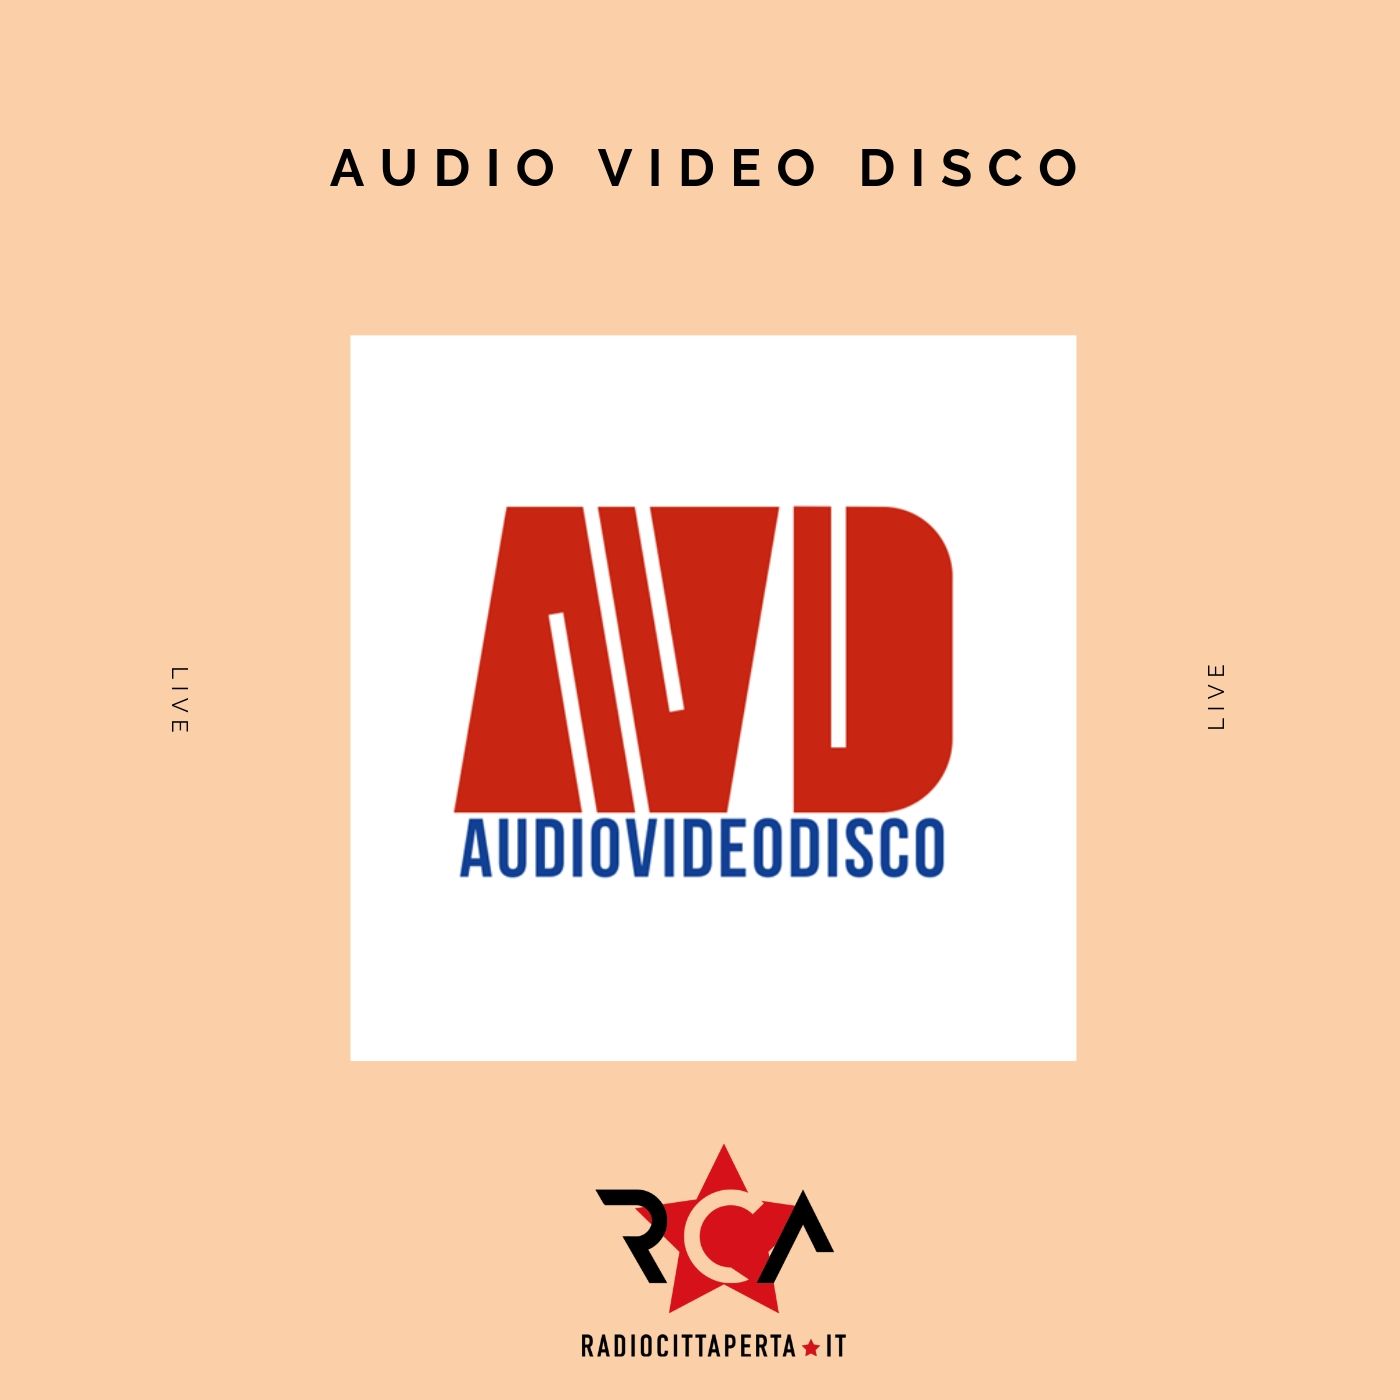 Audio Video Disco evidenza